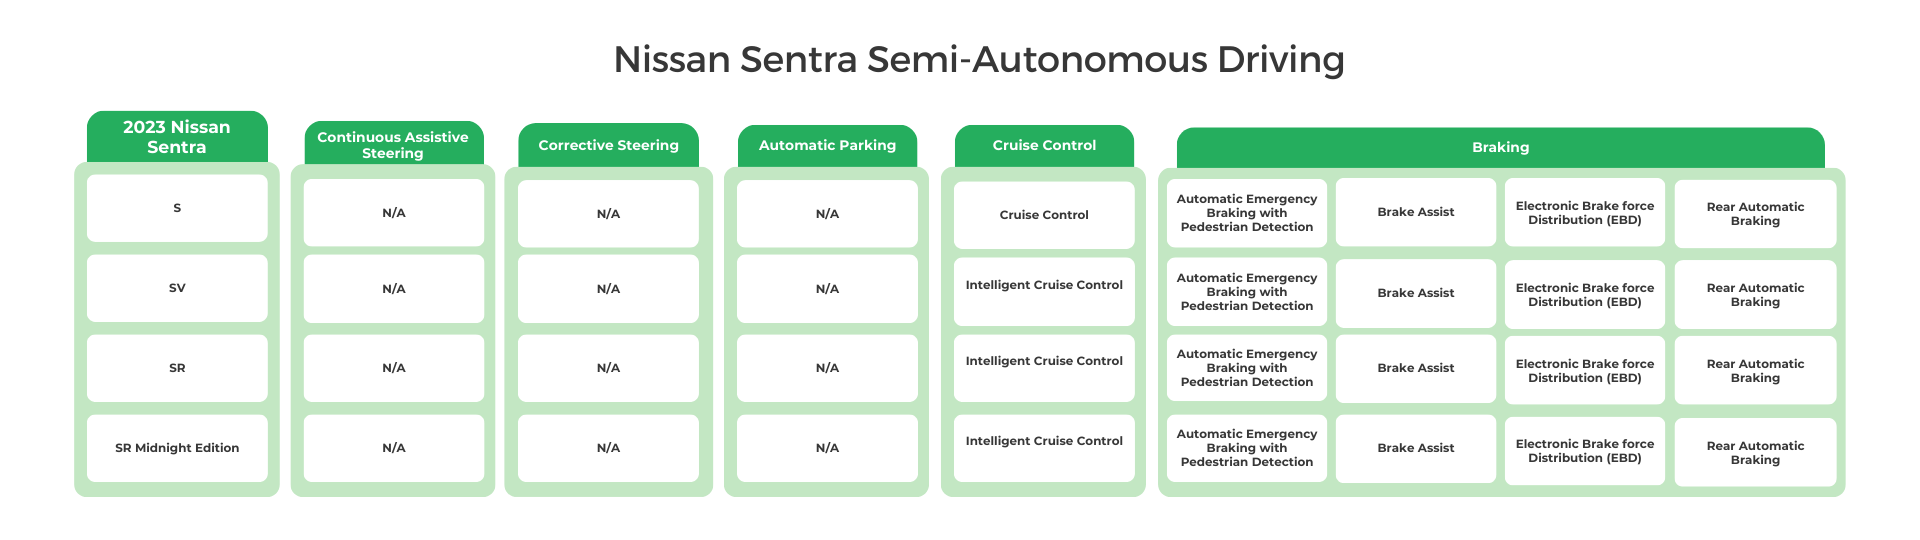 2023 Nissan Sentra Semi-Autonomous Driving Update